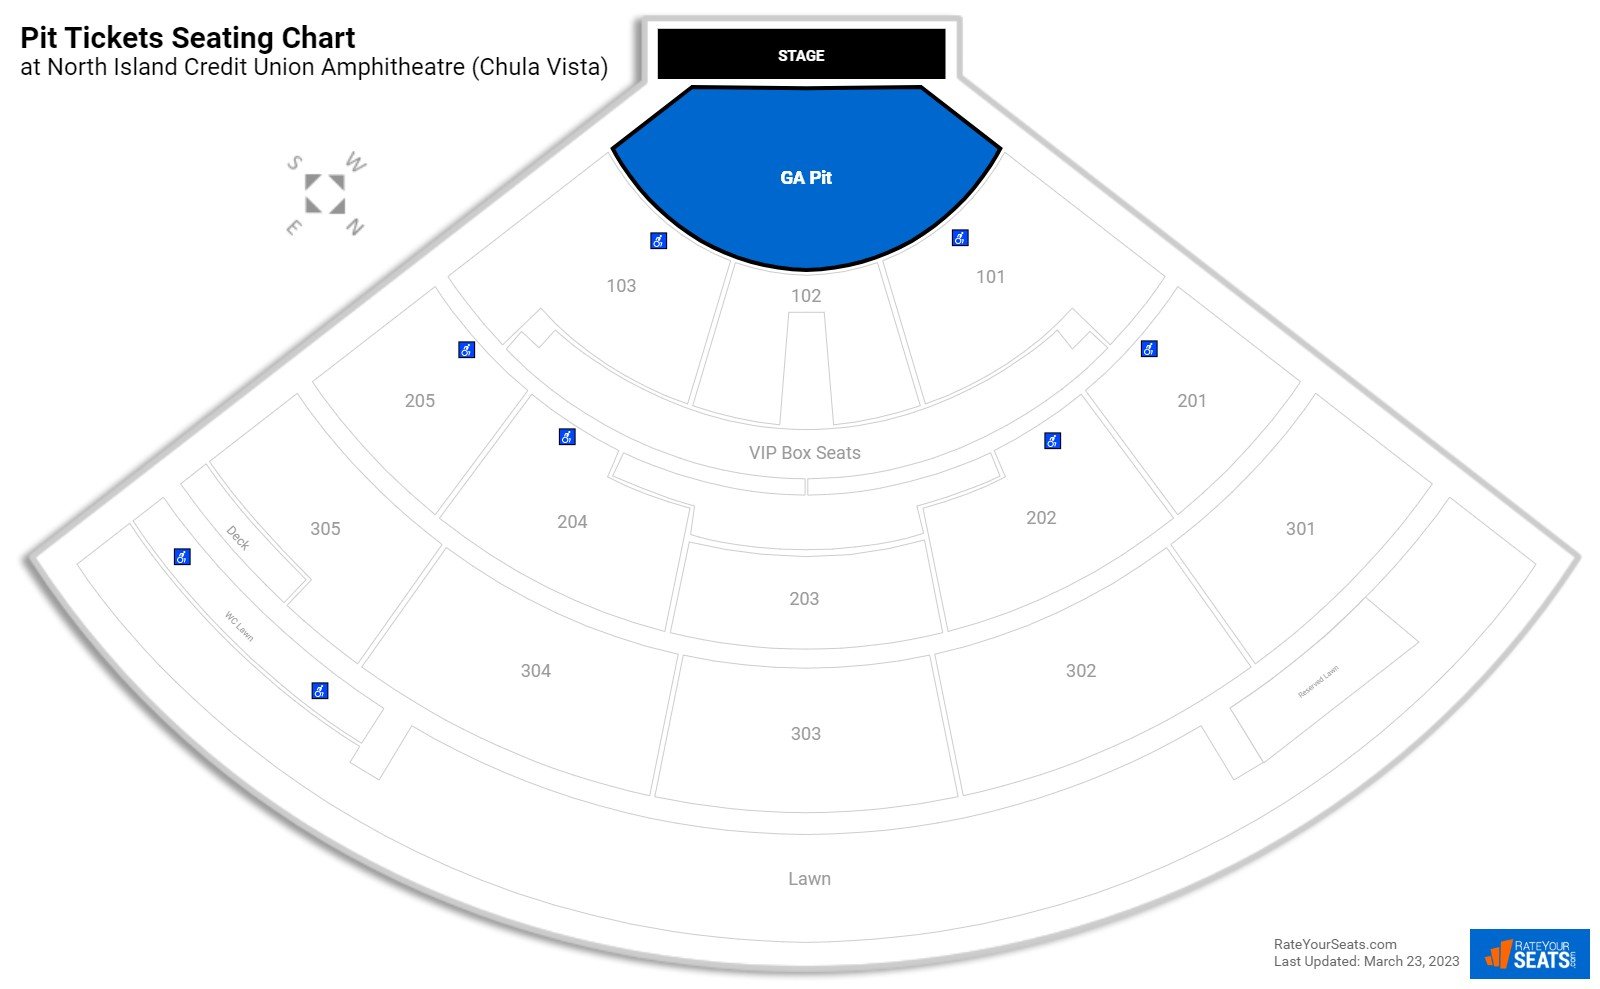 Concert Pit Tickets Seating Chart at North Island Credit Union Amphitheatre (Chula Vista)